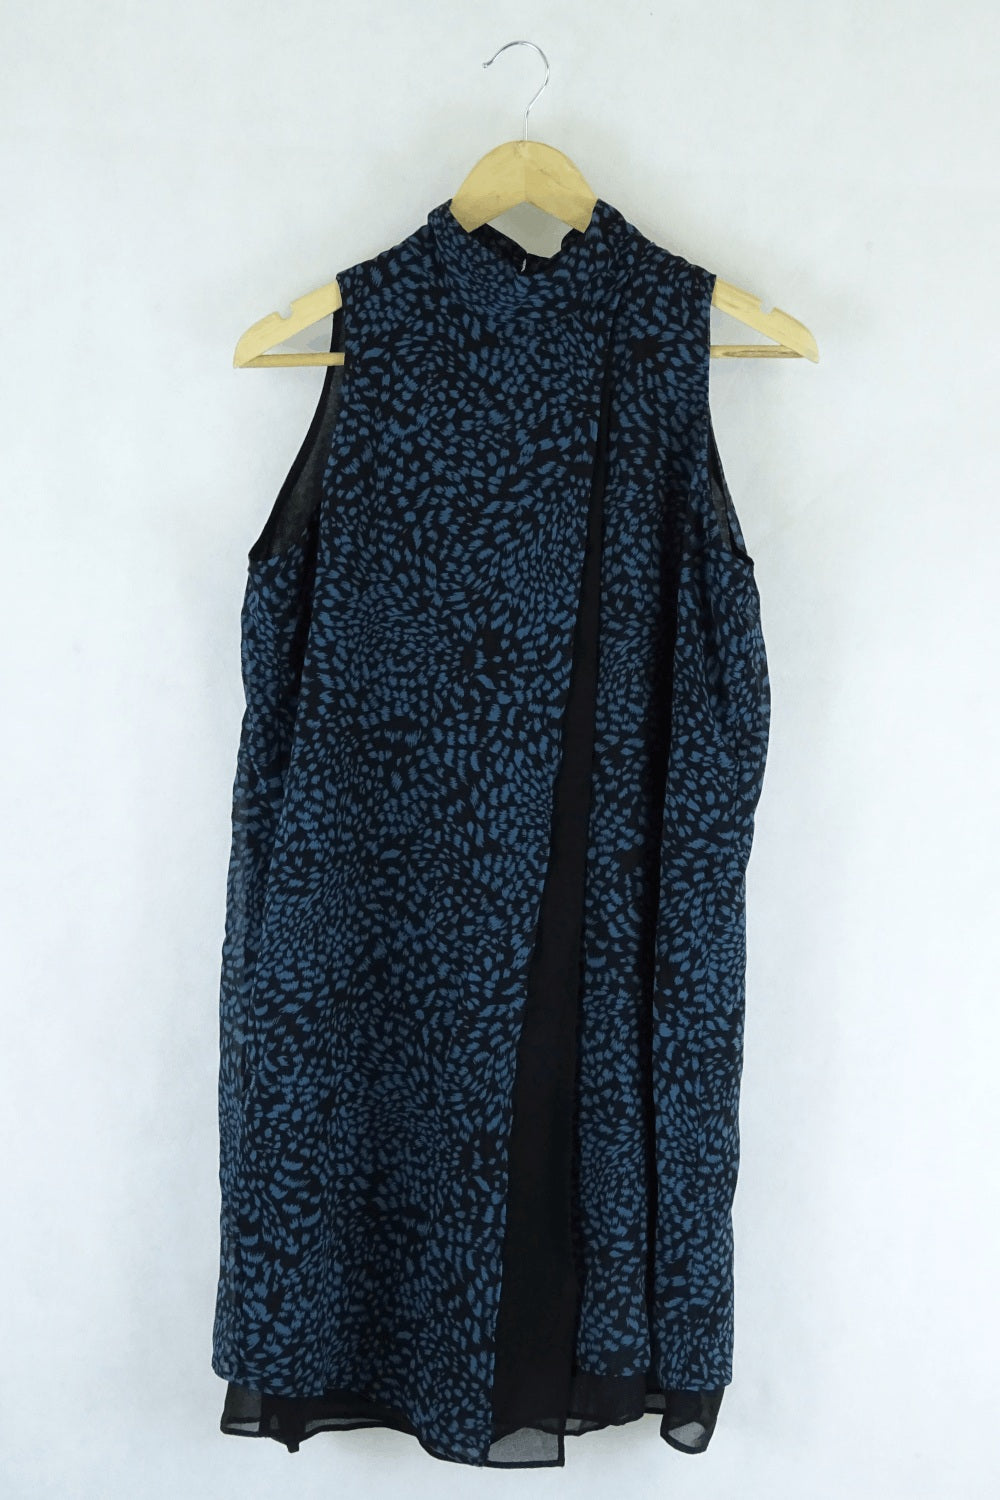 Lipsy London Blue and Black Lace Dress S - Reluv Clothing Australia